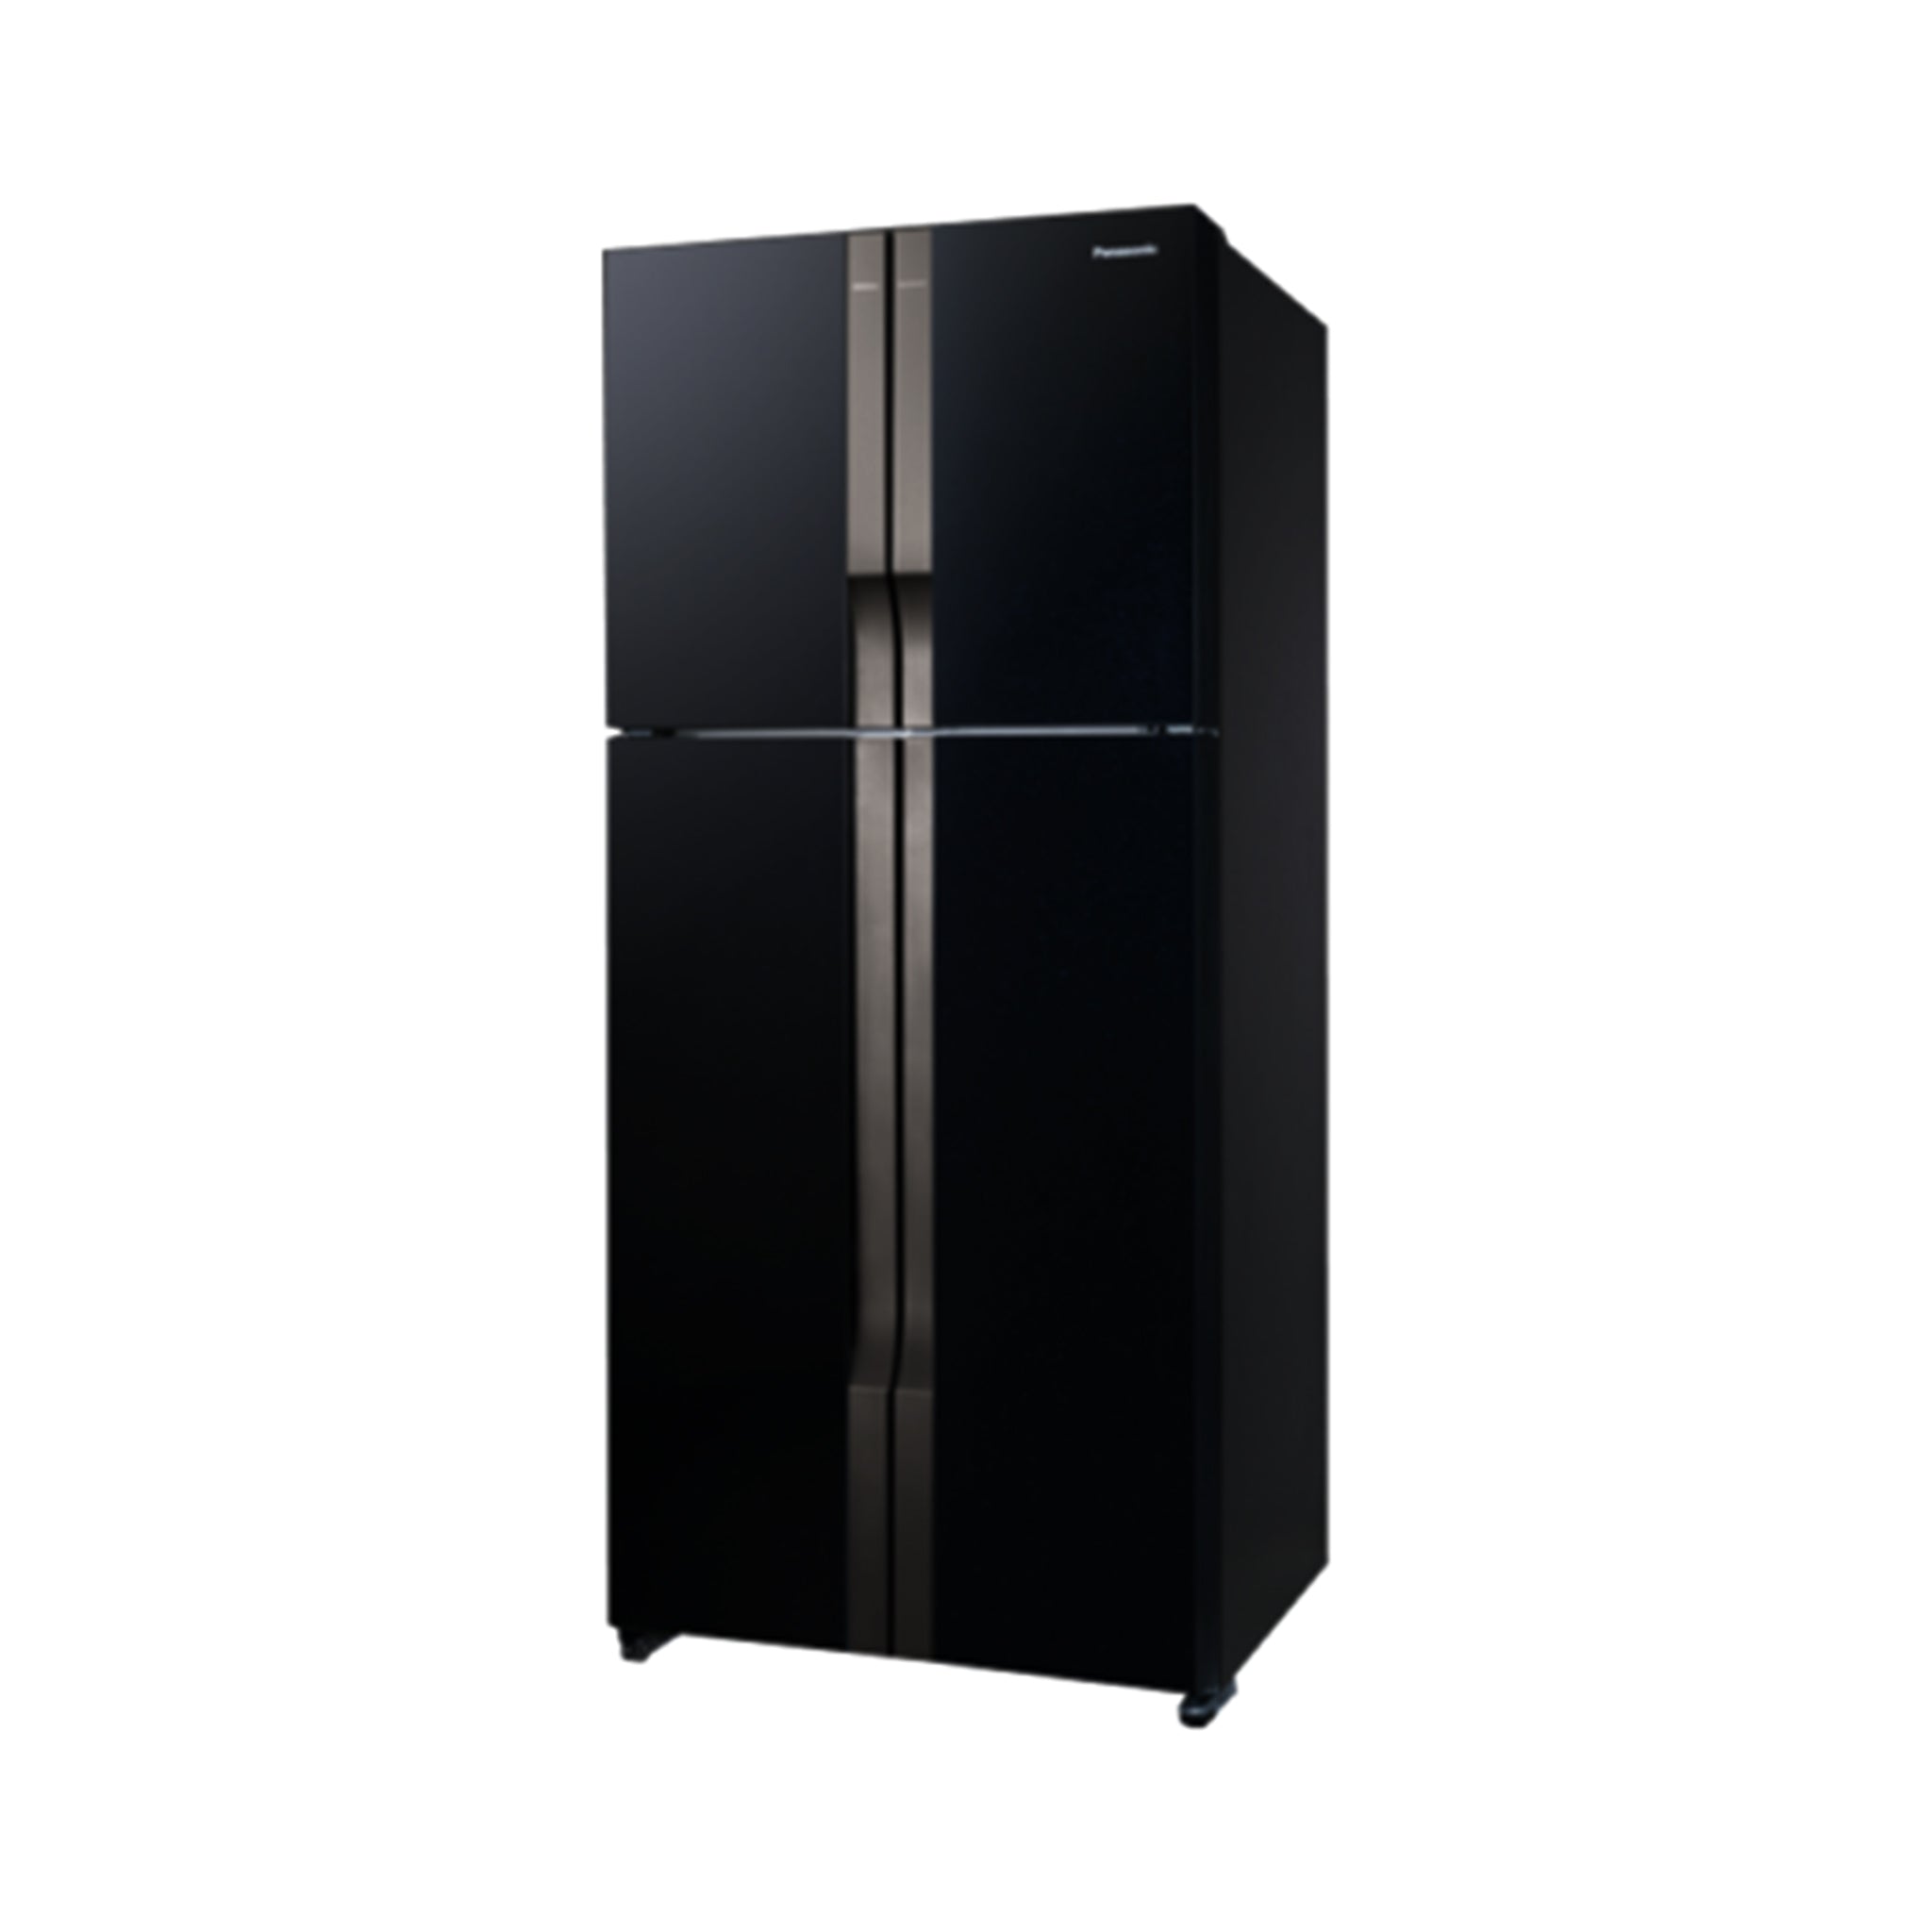 PANASONIC NR-DZ601VGKP 4-Door Bottom Freezer Refrigerator Panasonic